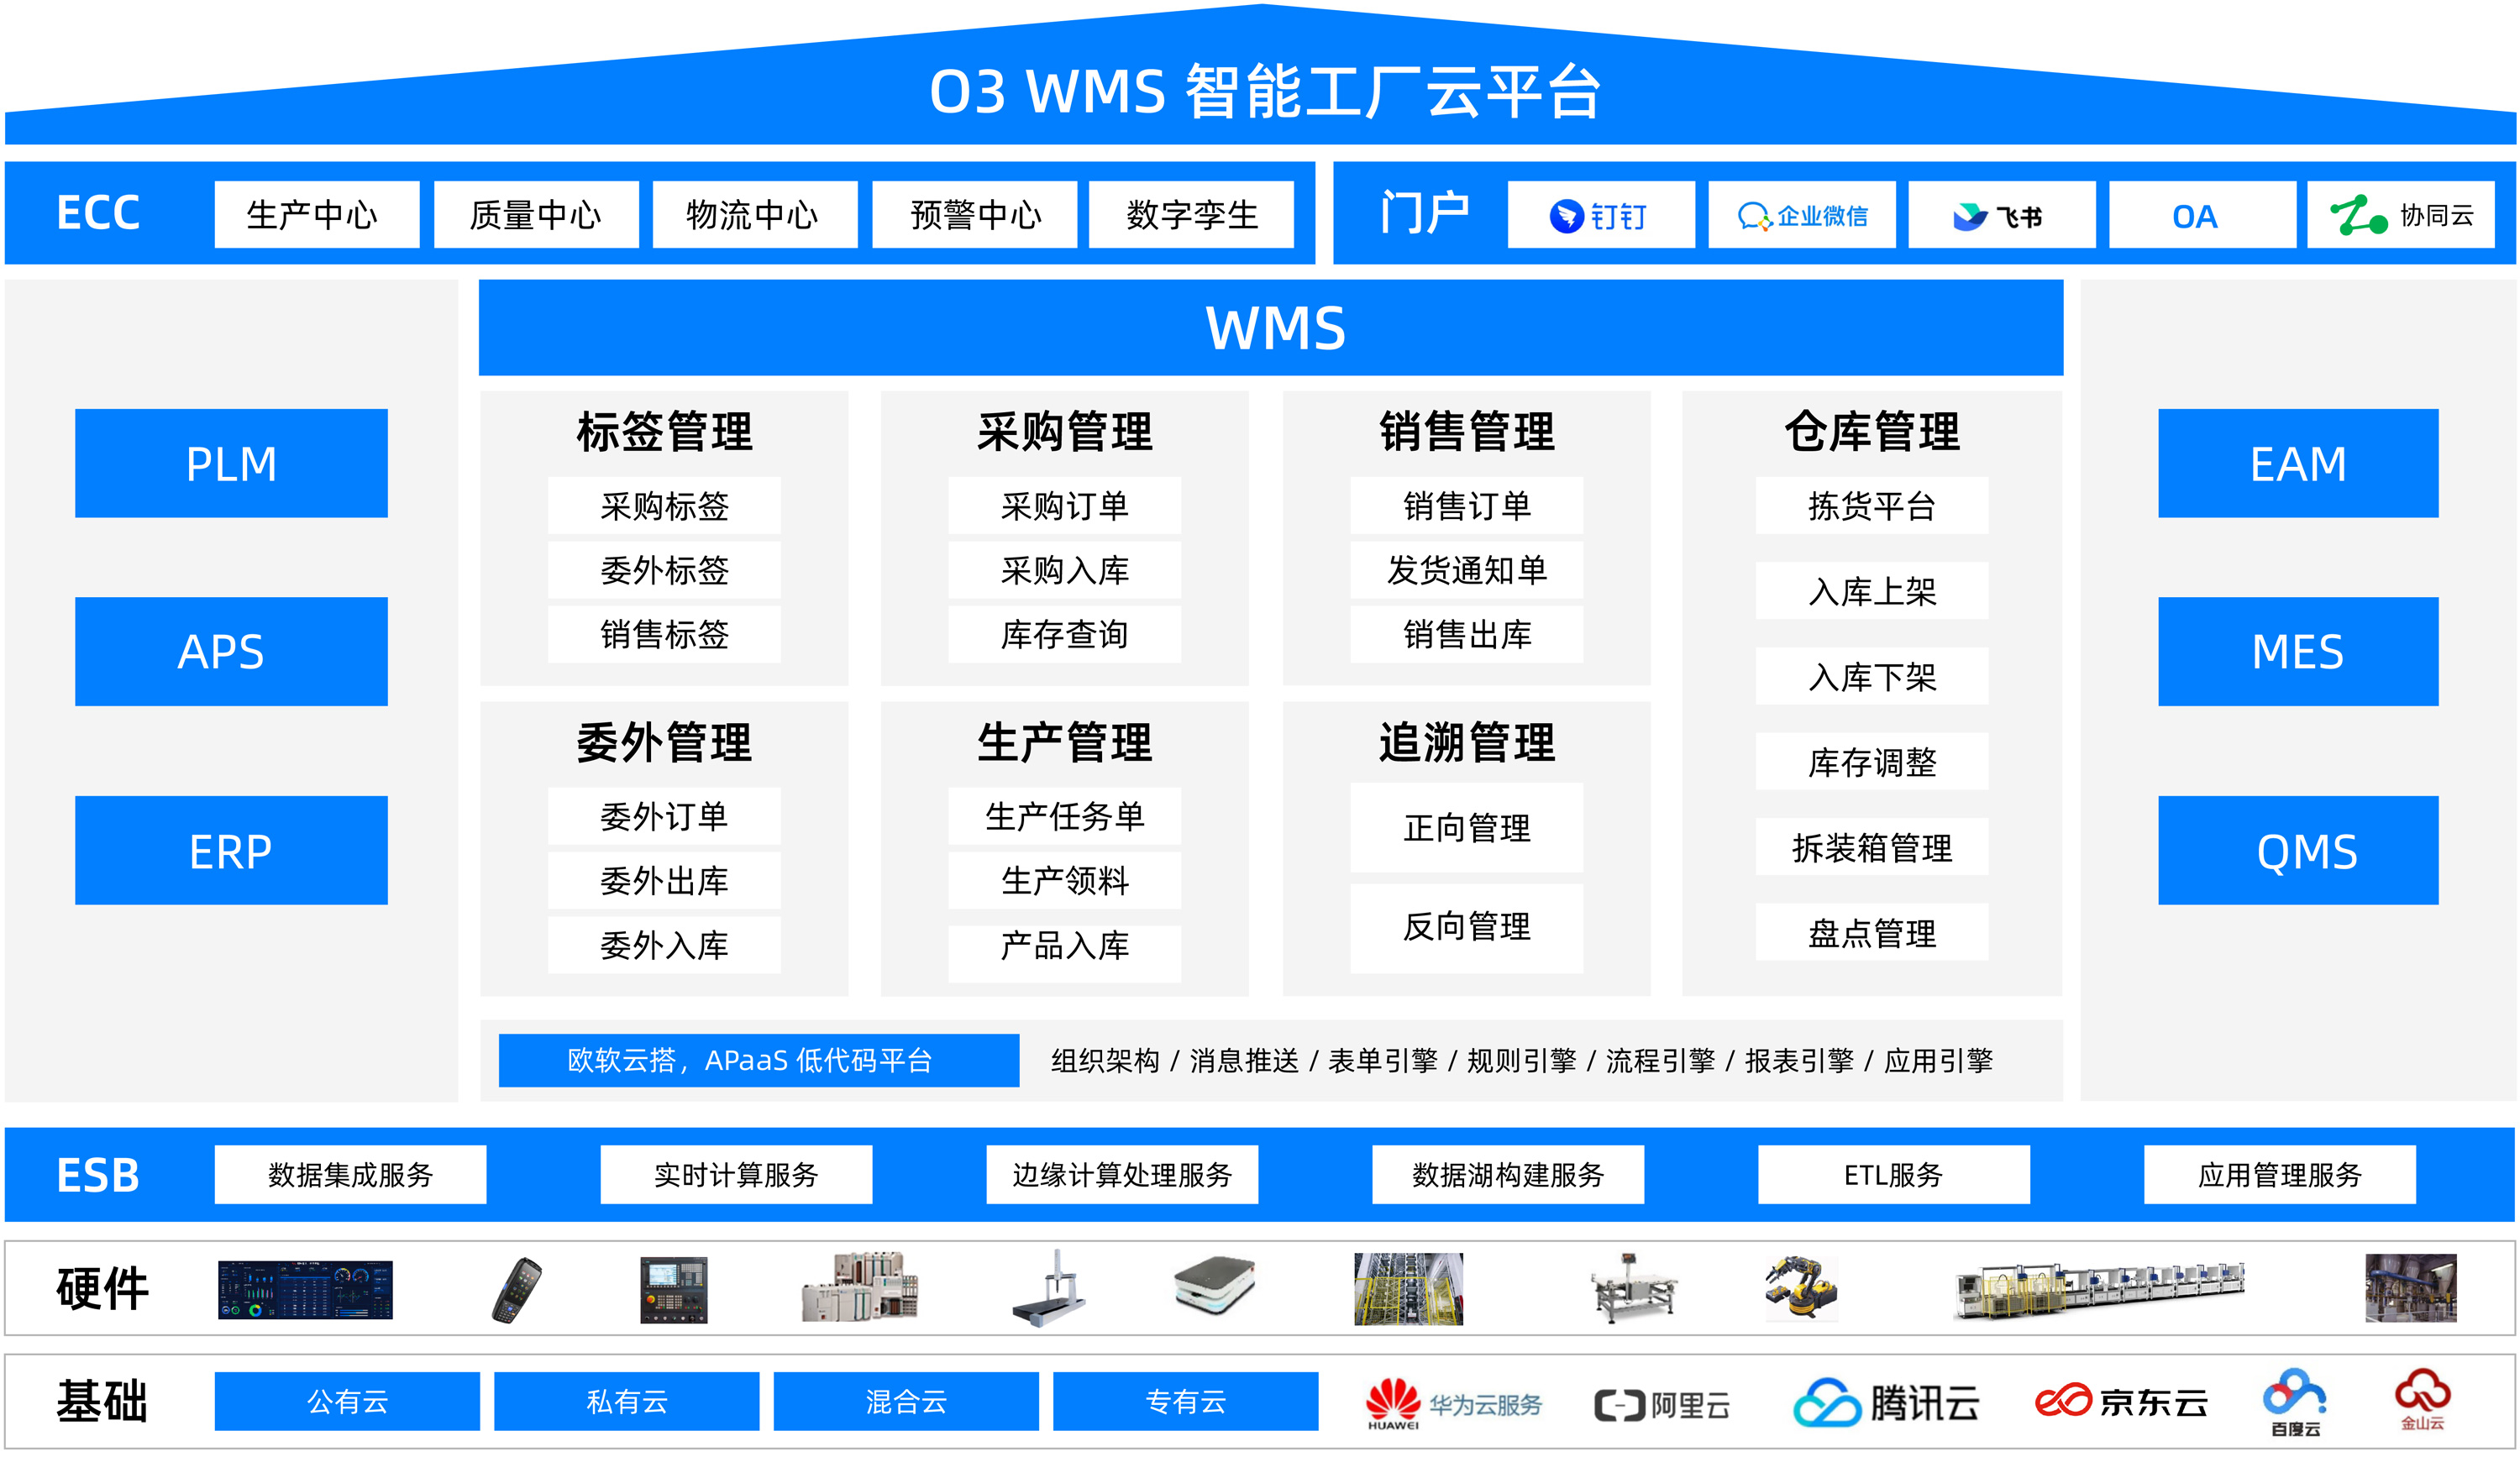 MES-WMS-QMS-EAM页面-02.jpg